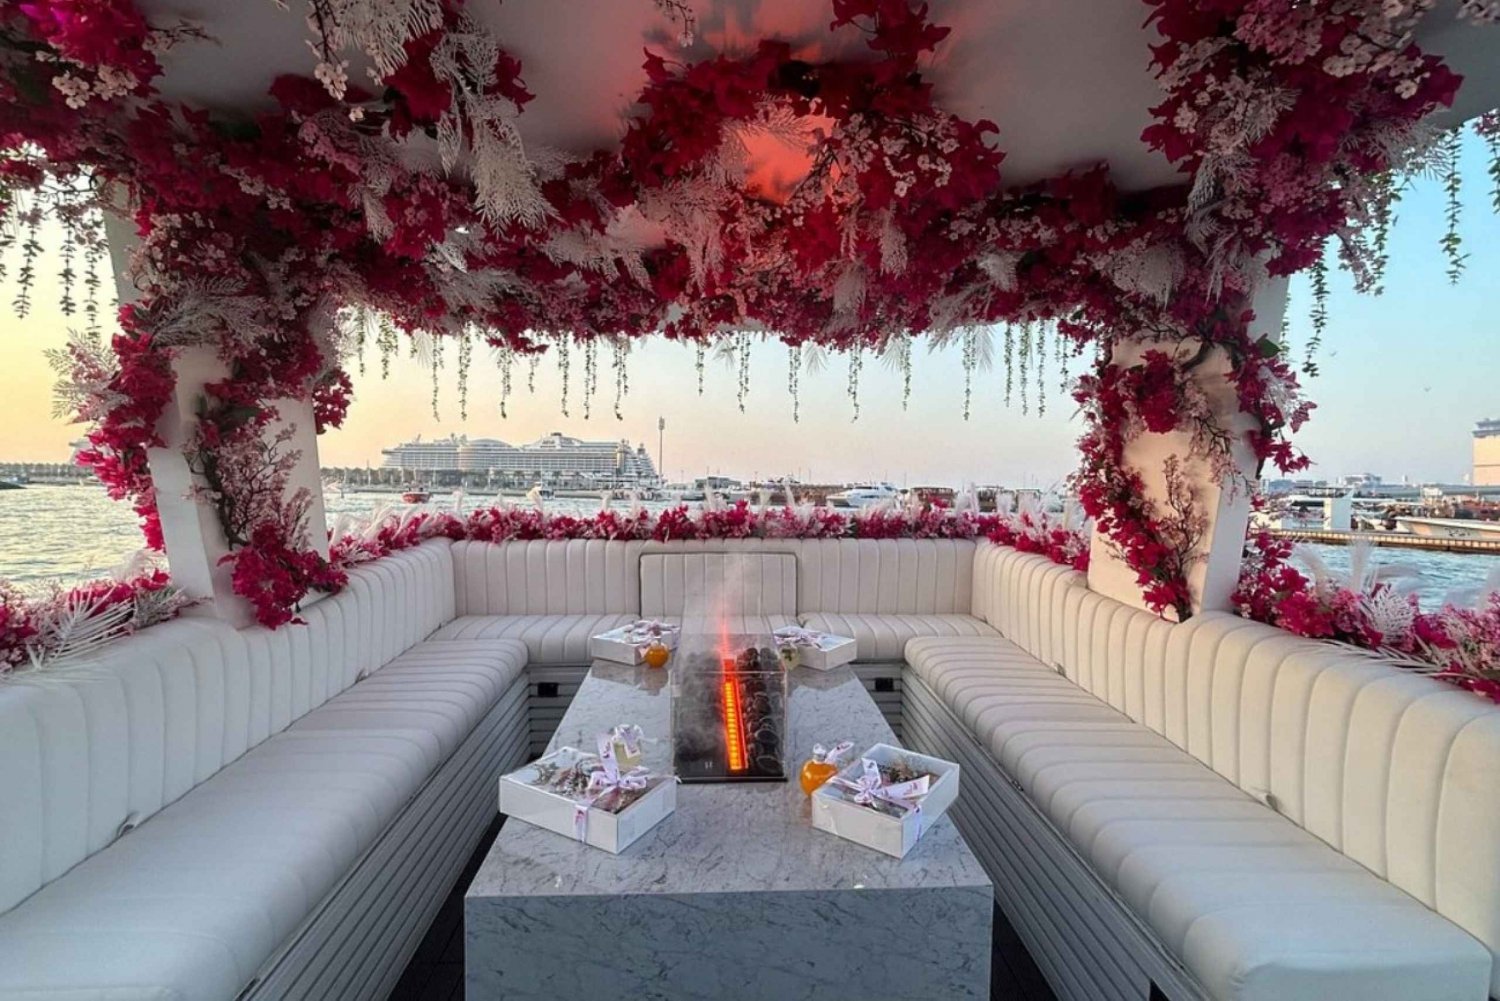 Dubai Marina: Private Luxury Flower Yacht Tour with Brunch